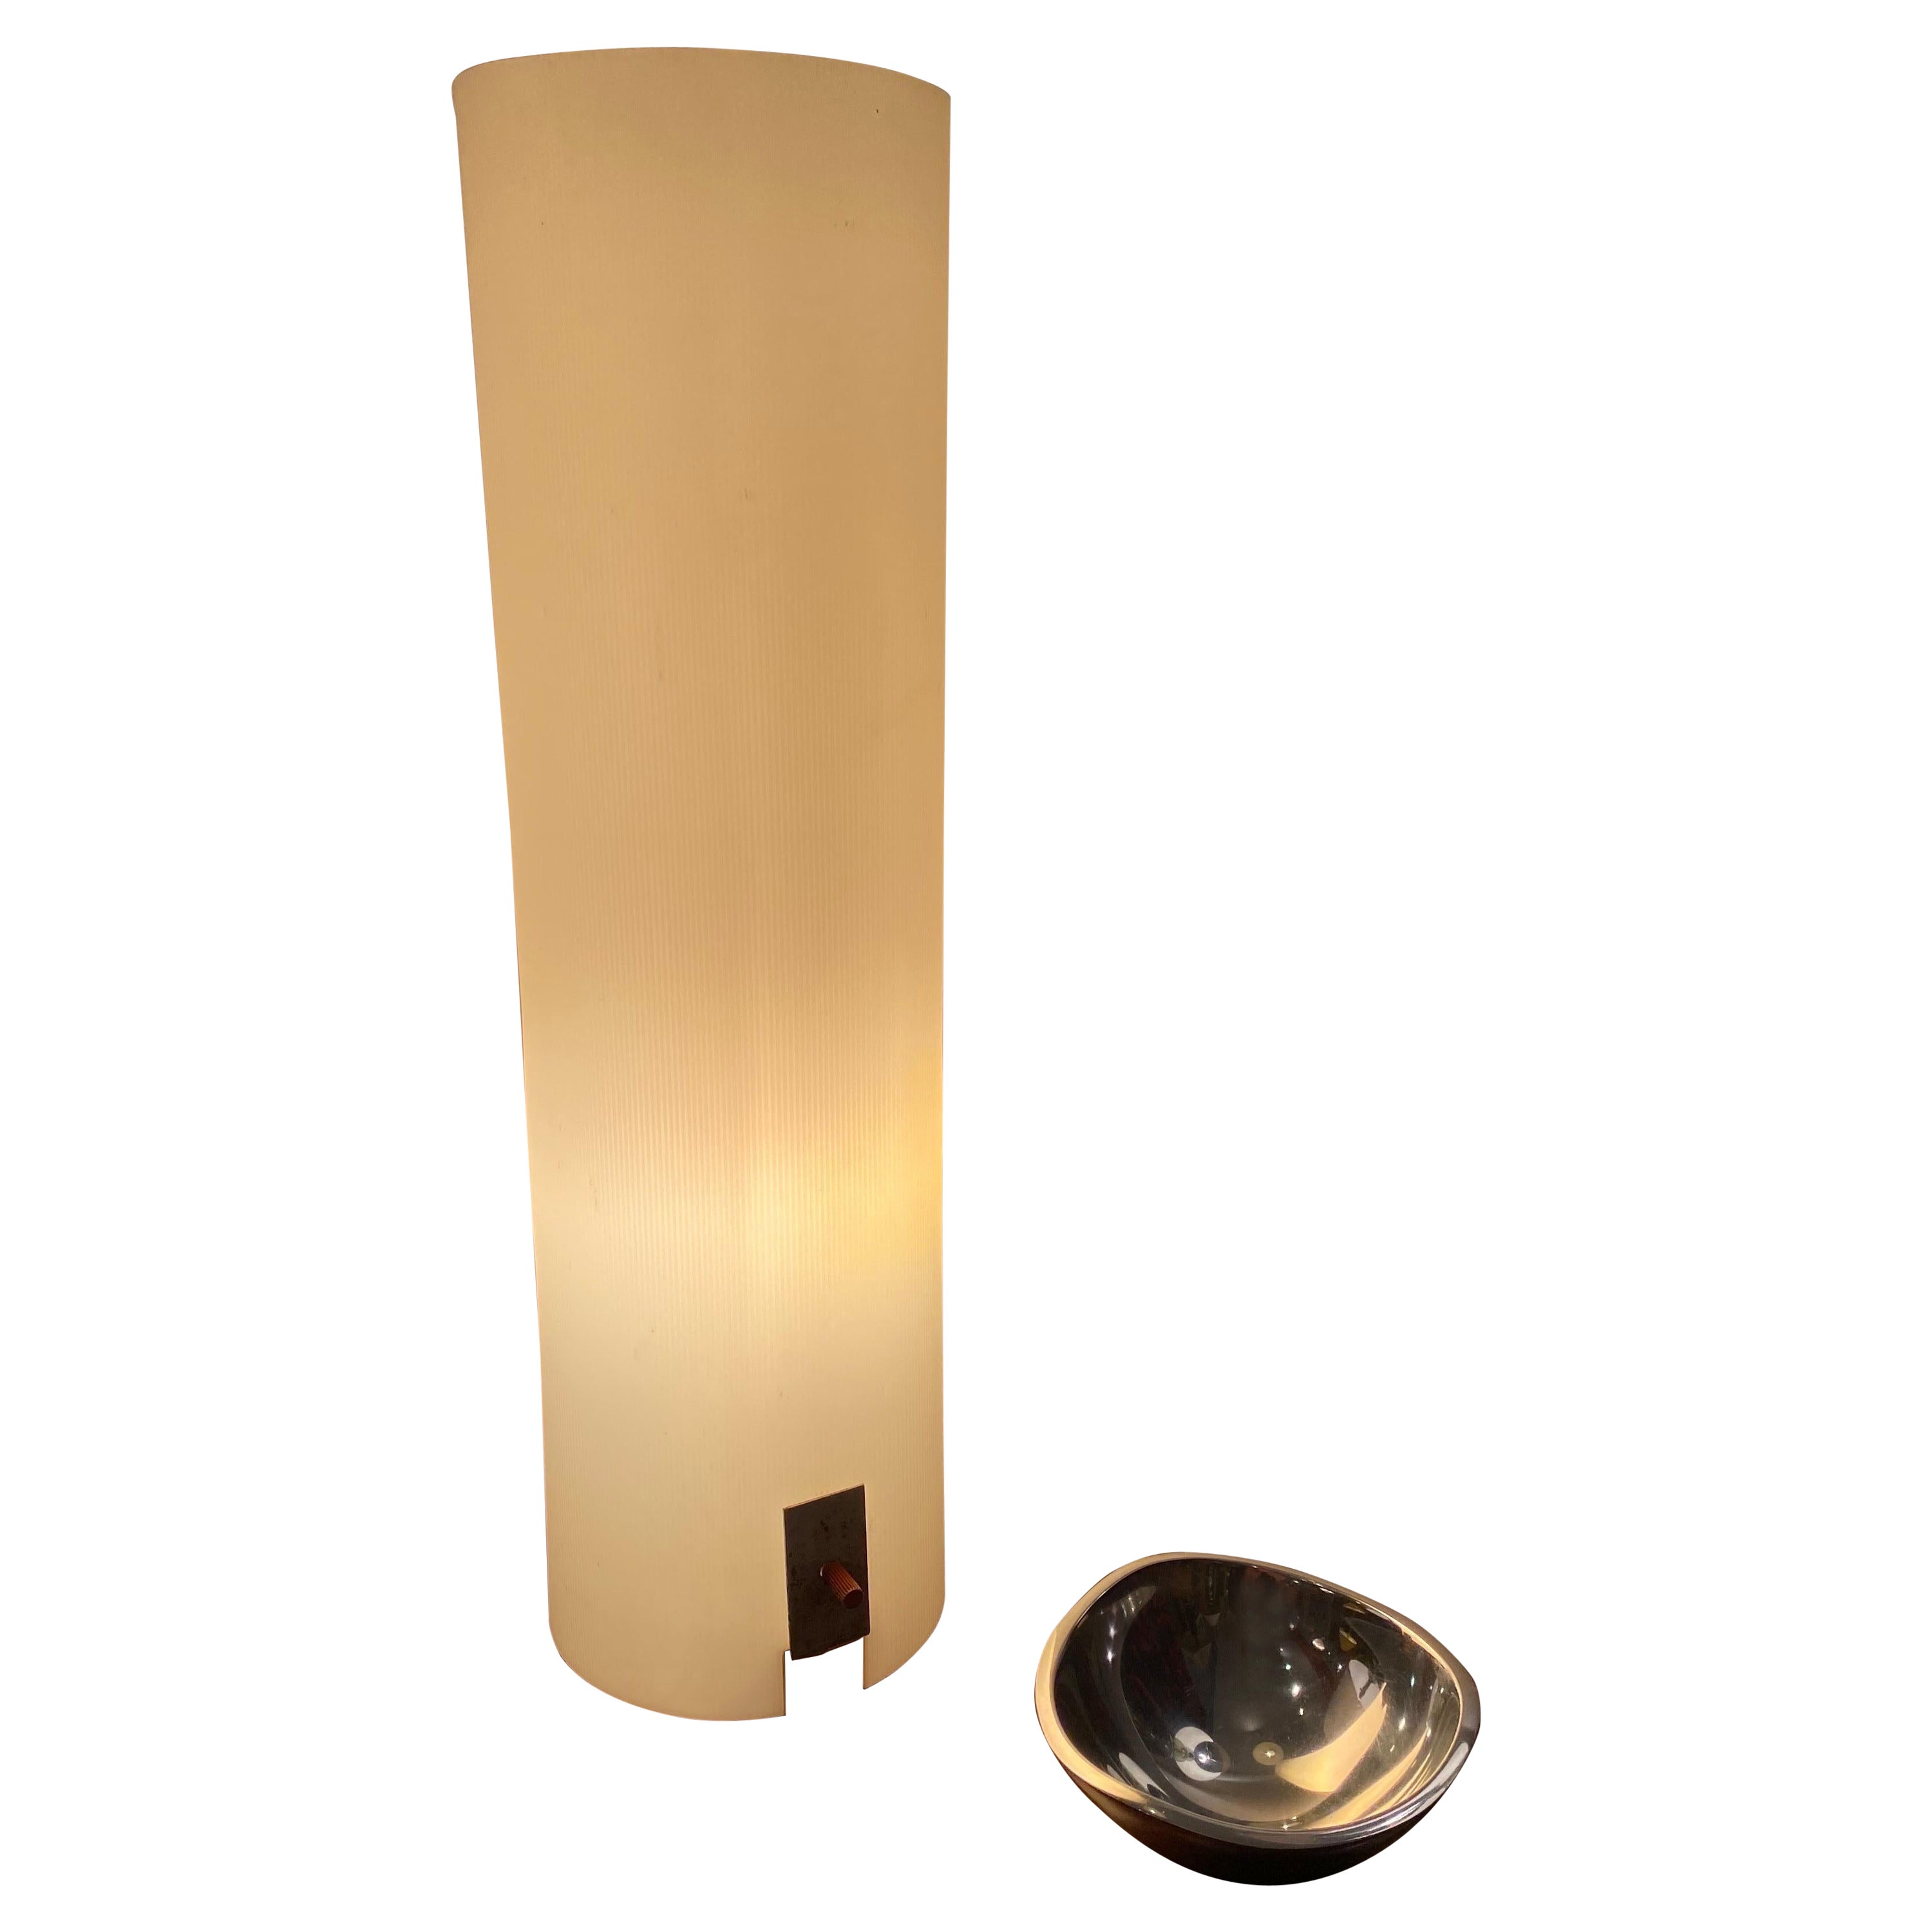 Bill Curry Design Line, röhrenförmige Tischlampe